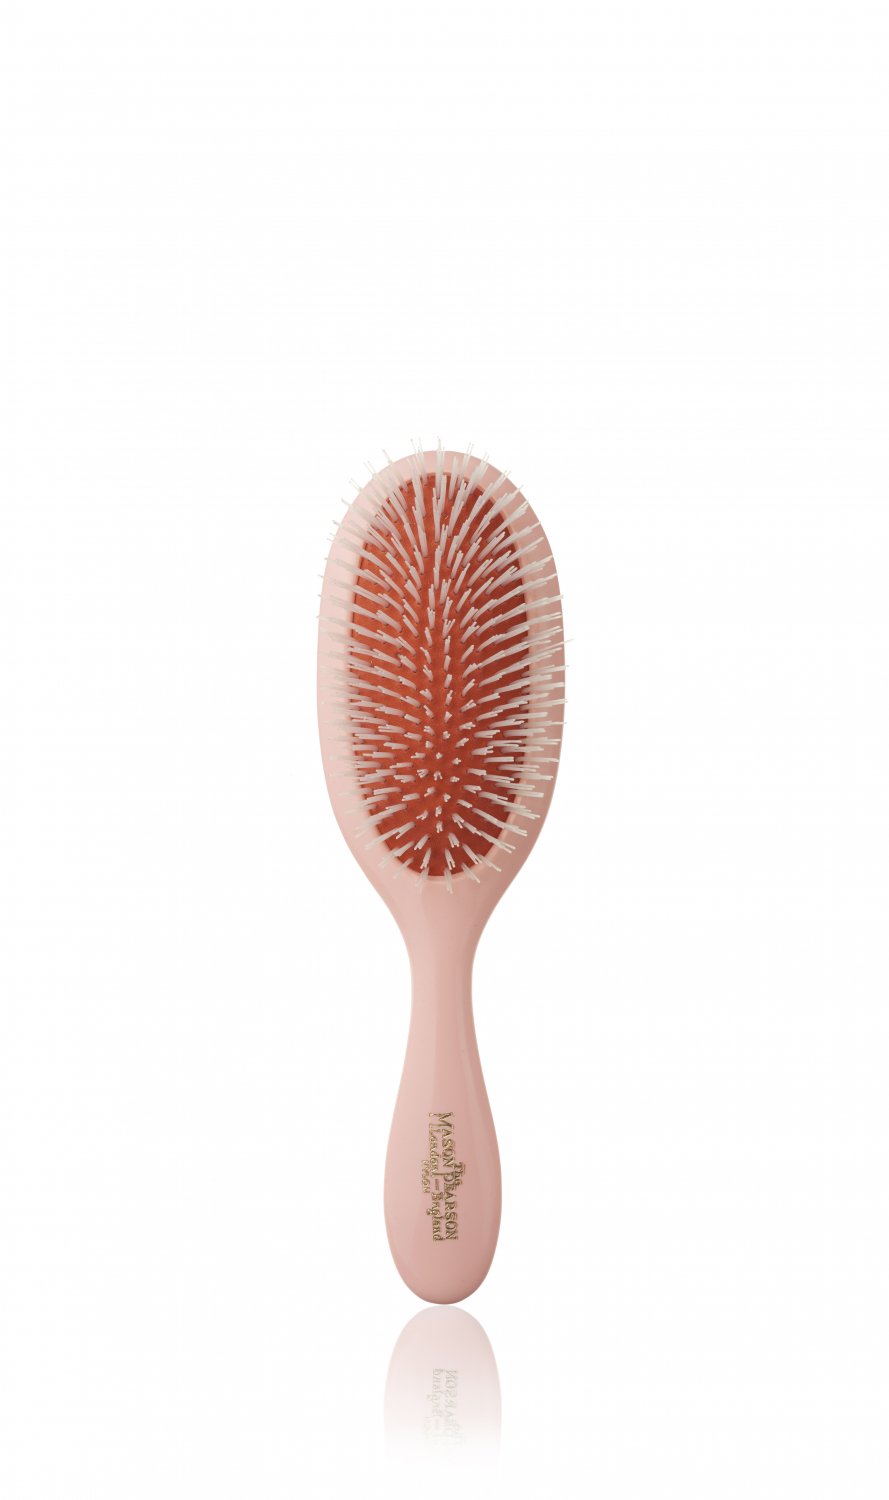 N3 Handy Nylon Hairbrush from Mason Pearson (Pink) 